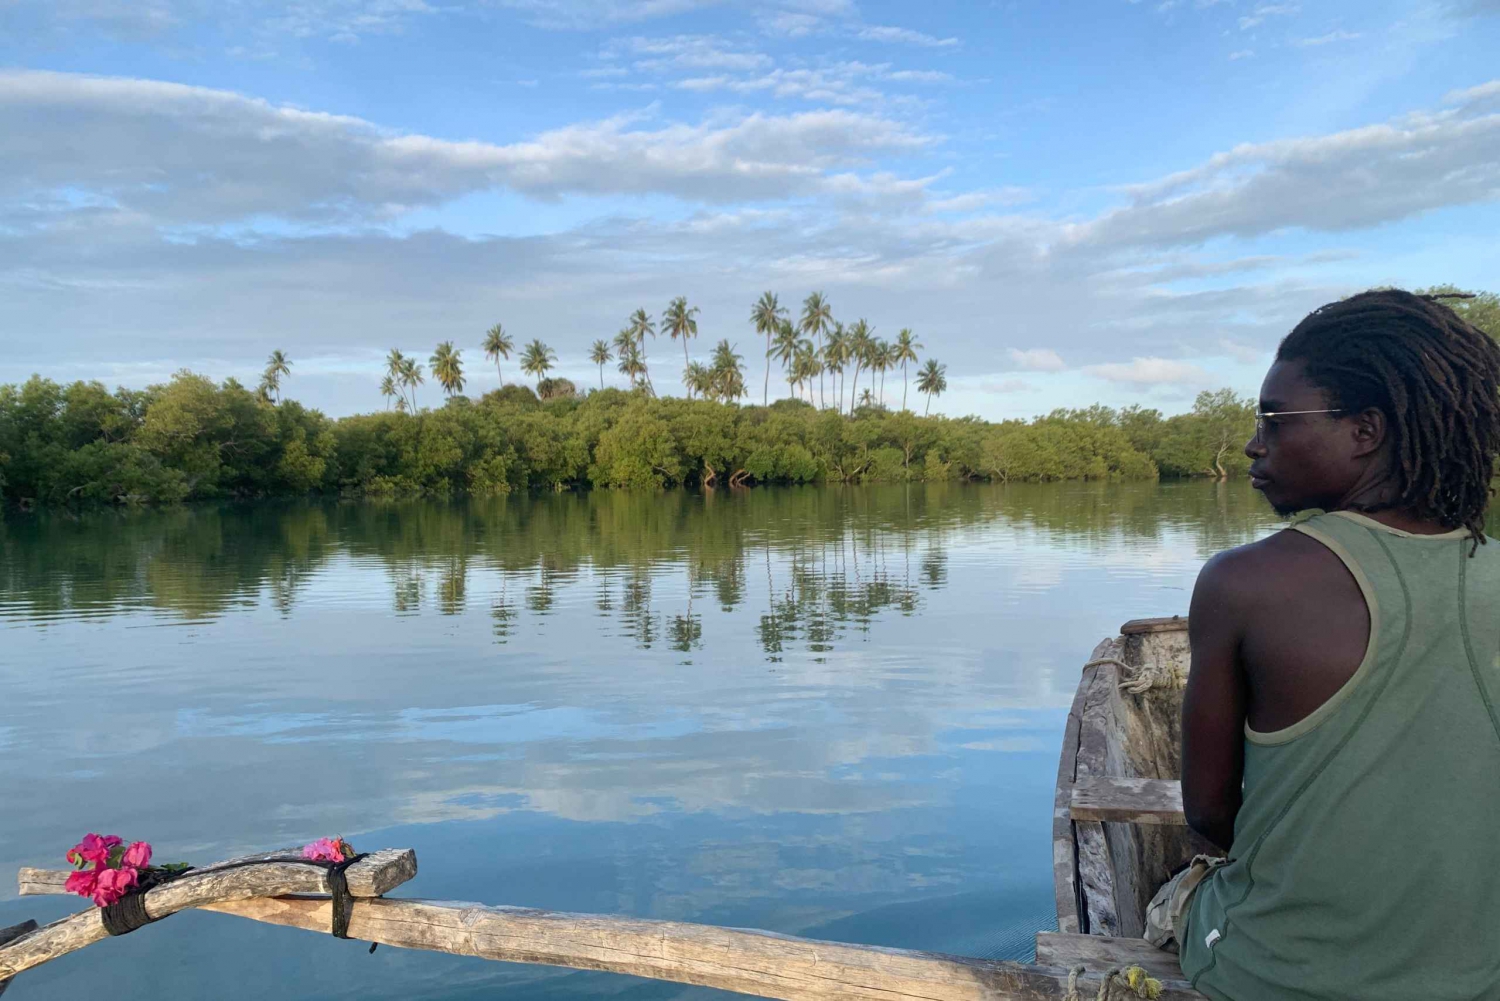 Diani: Kanutour bei Sonnenuntergang entlang des Flusses mit Mangroven